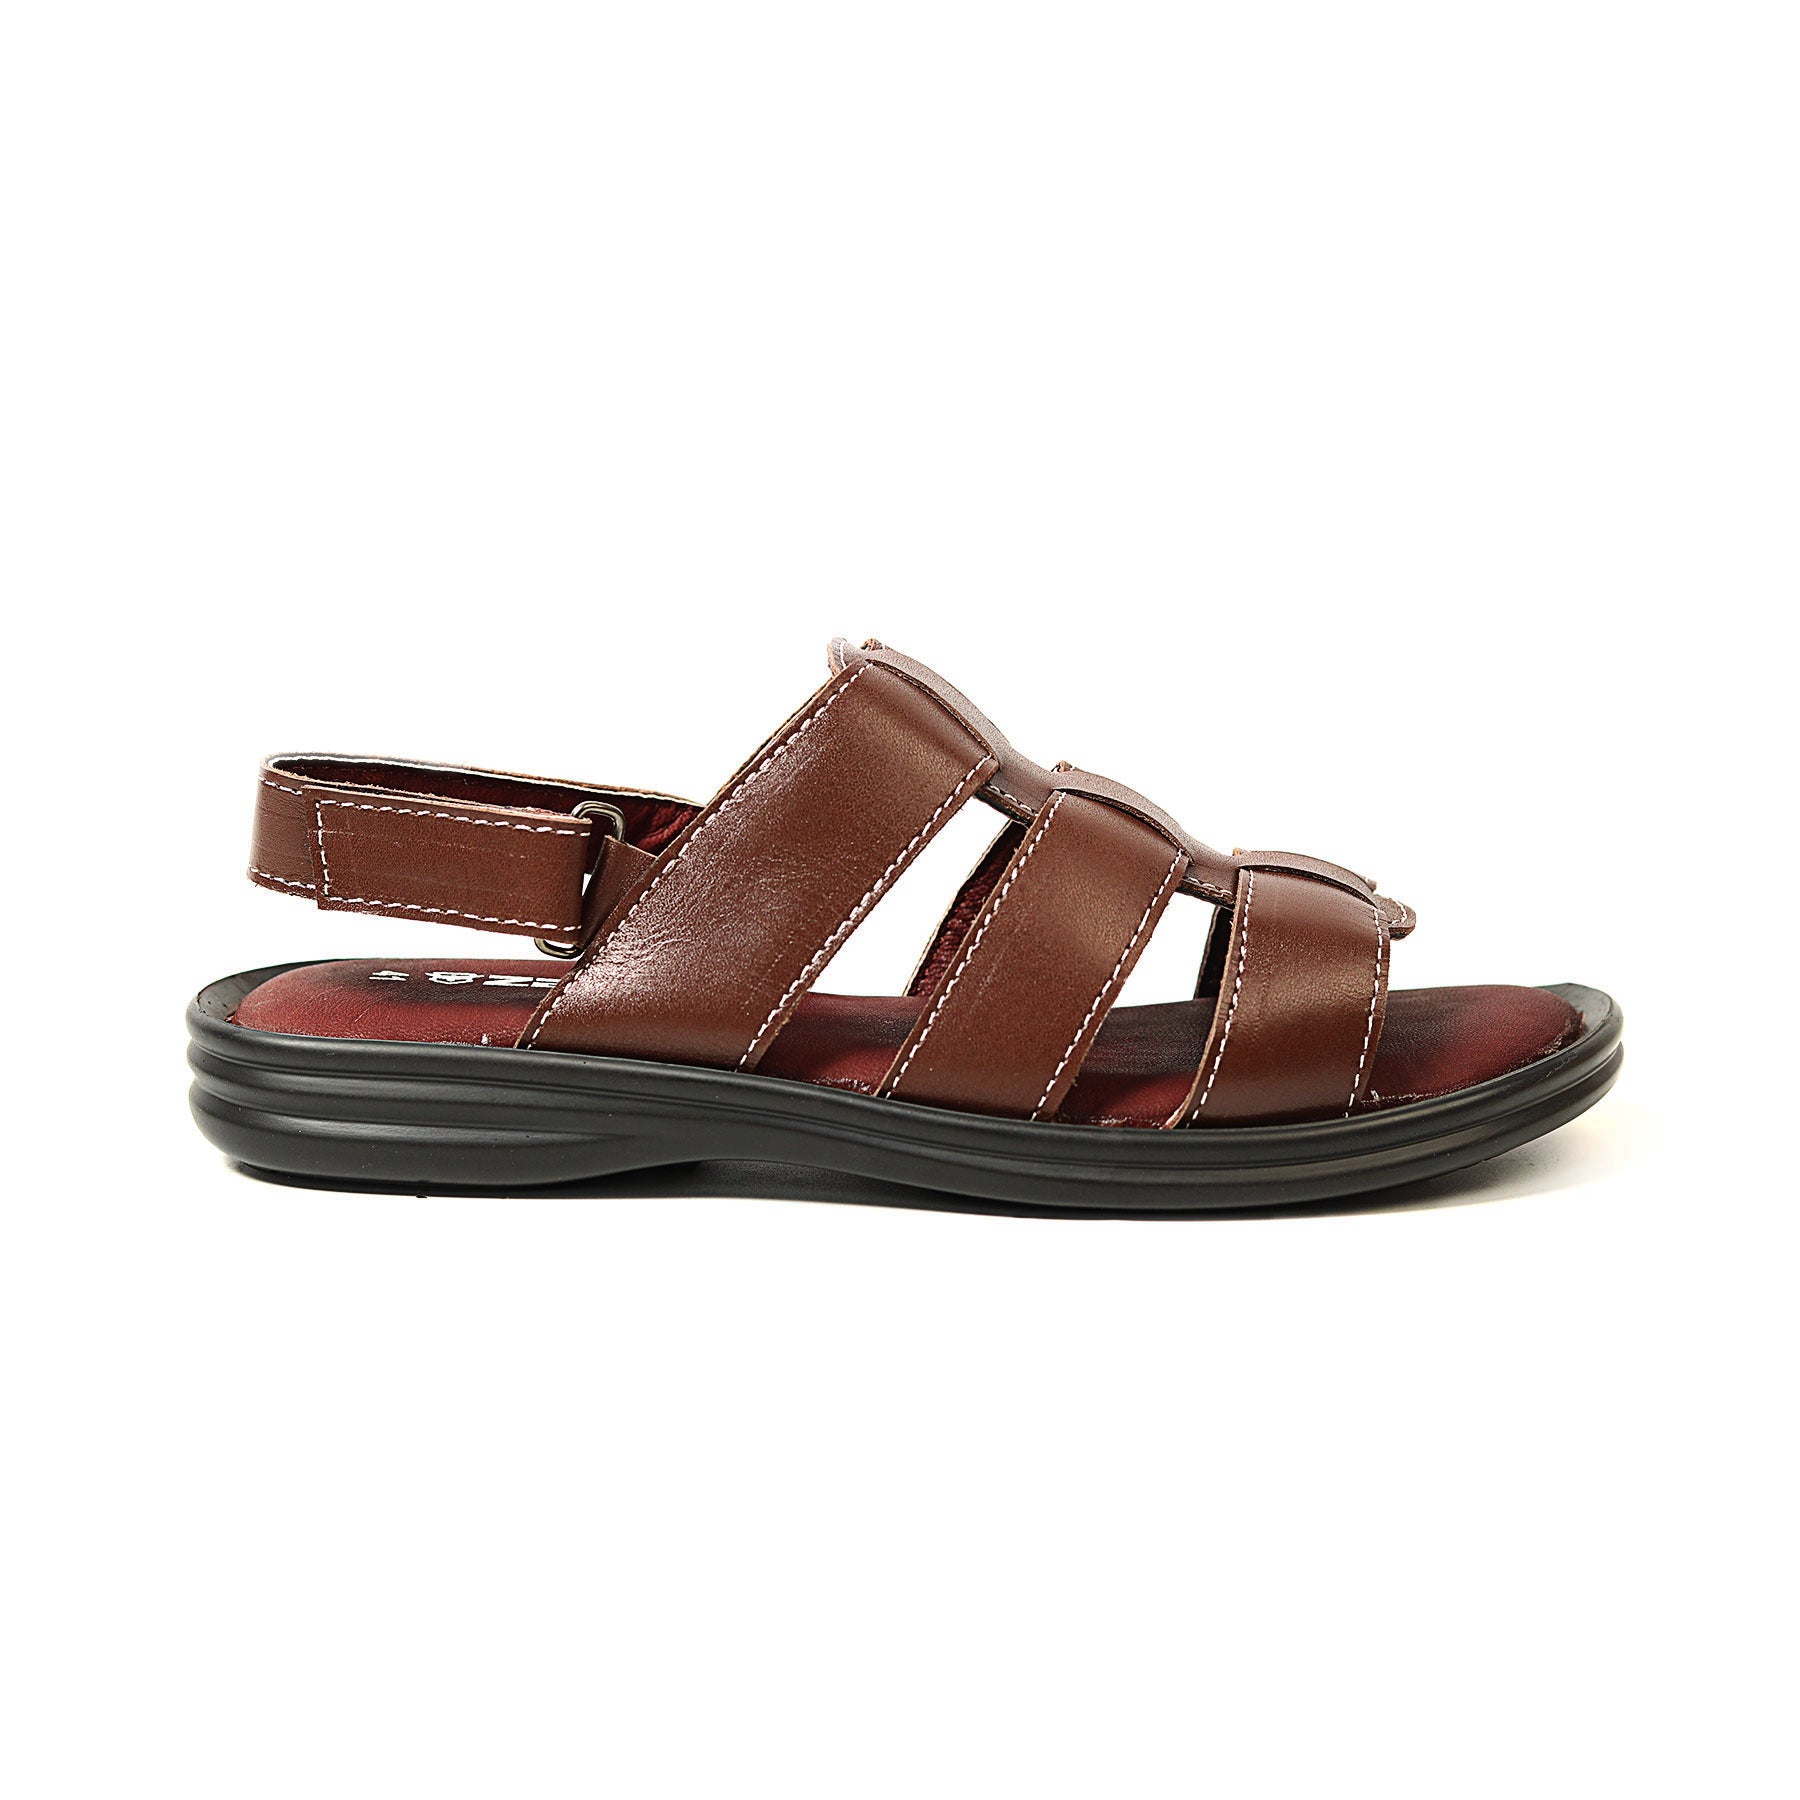 Zays Leather Sandal For Men (Chocolate) - ZA16